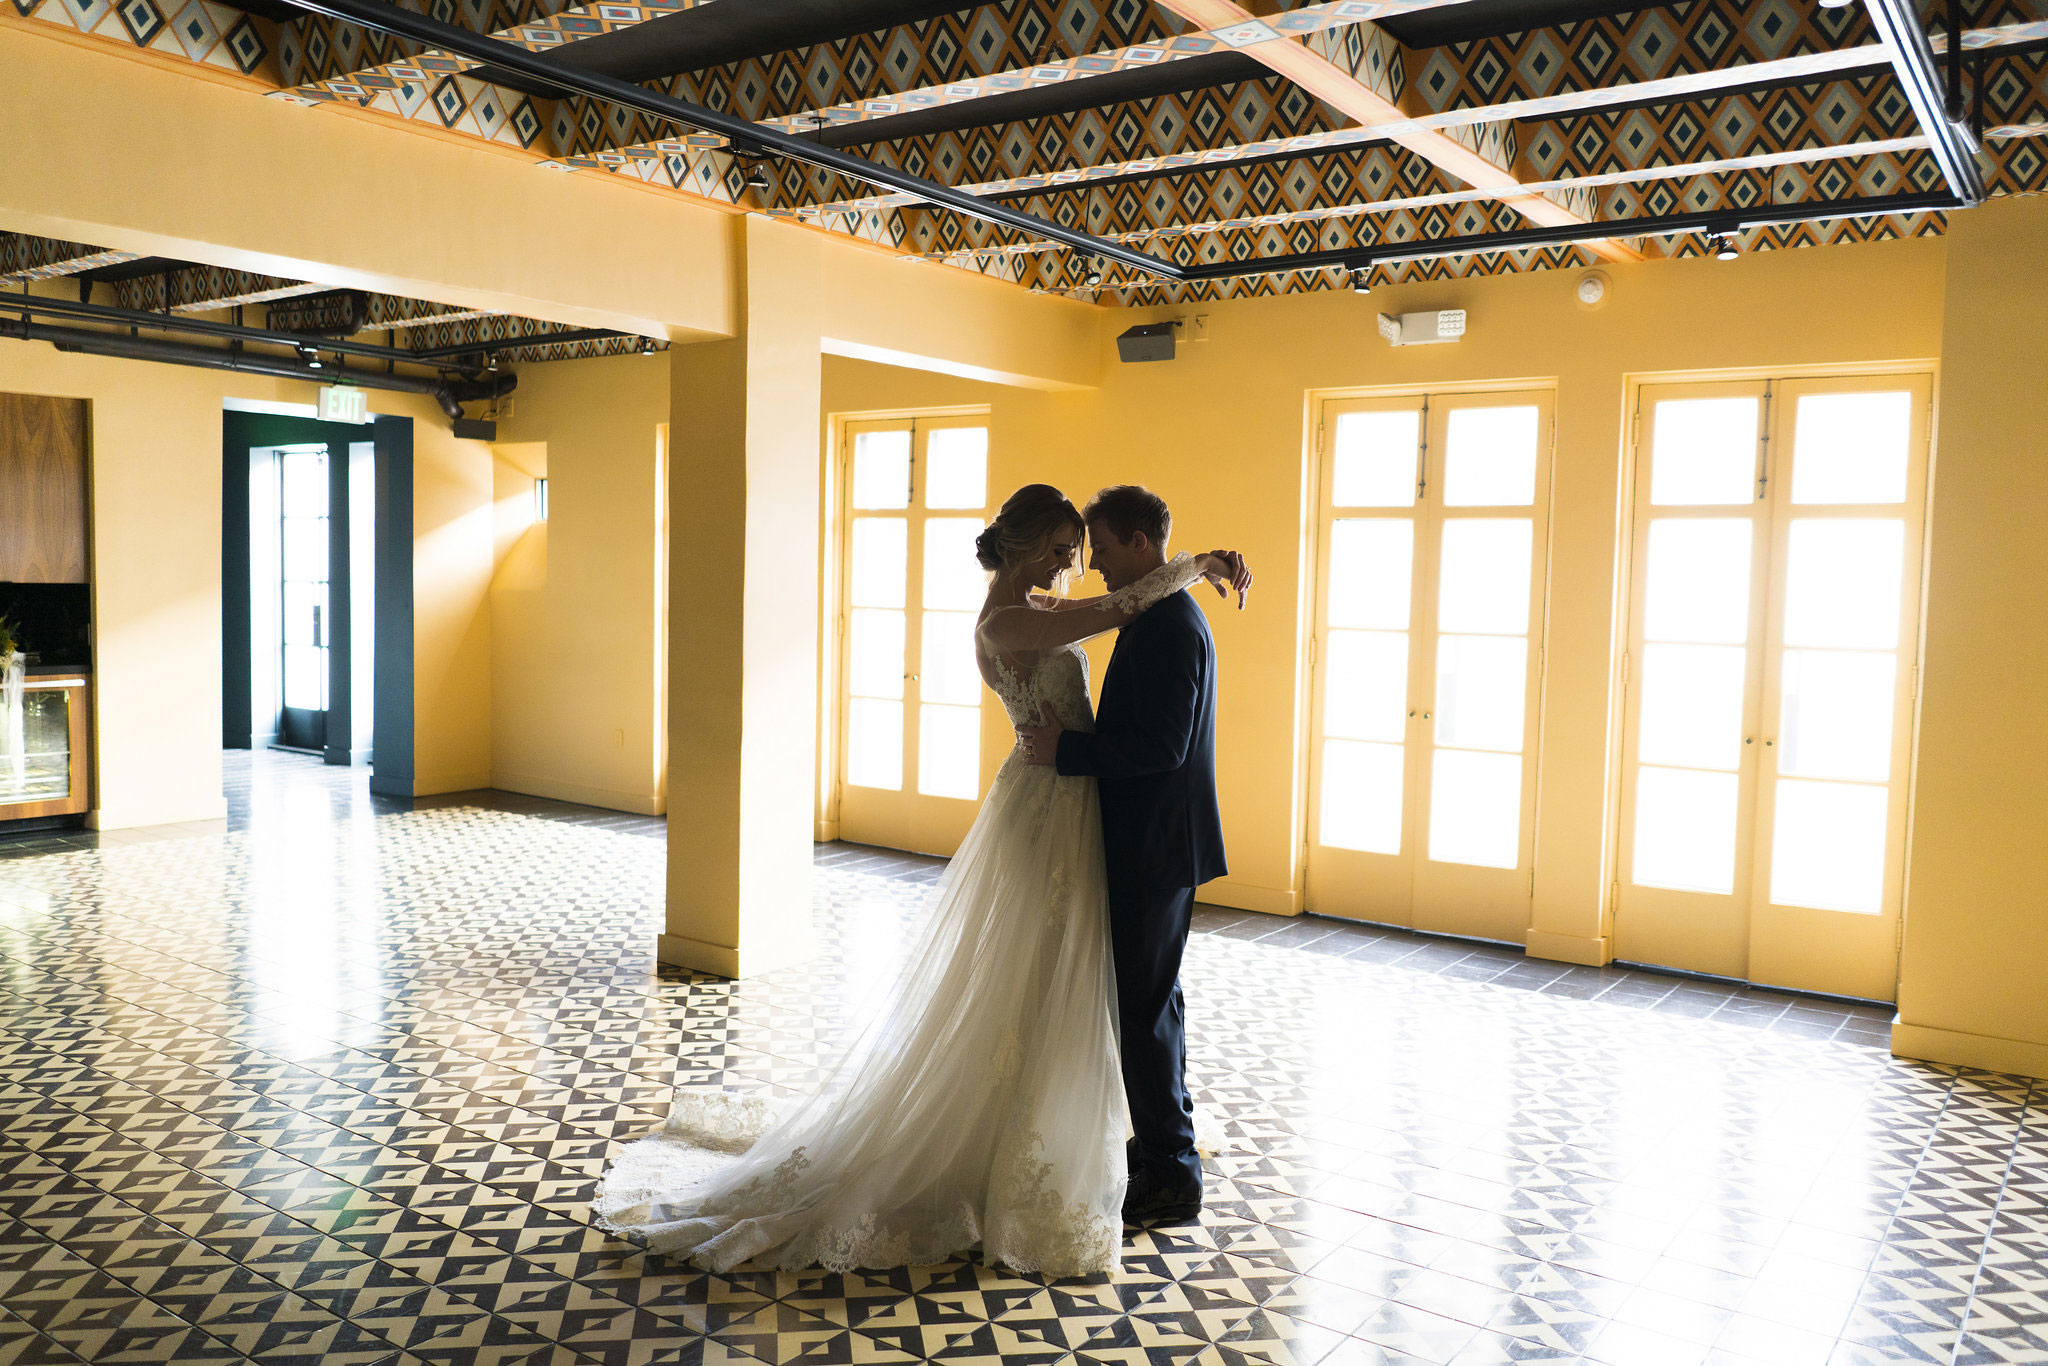 Bride and Groom Dancing in an Empty Yellow Room